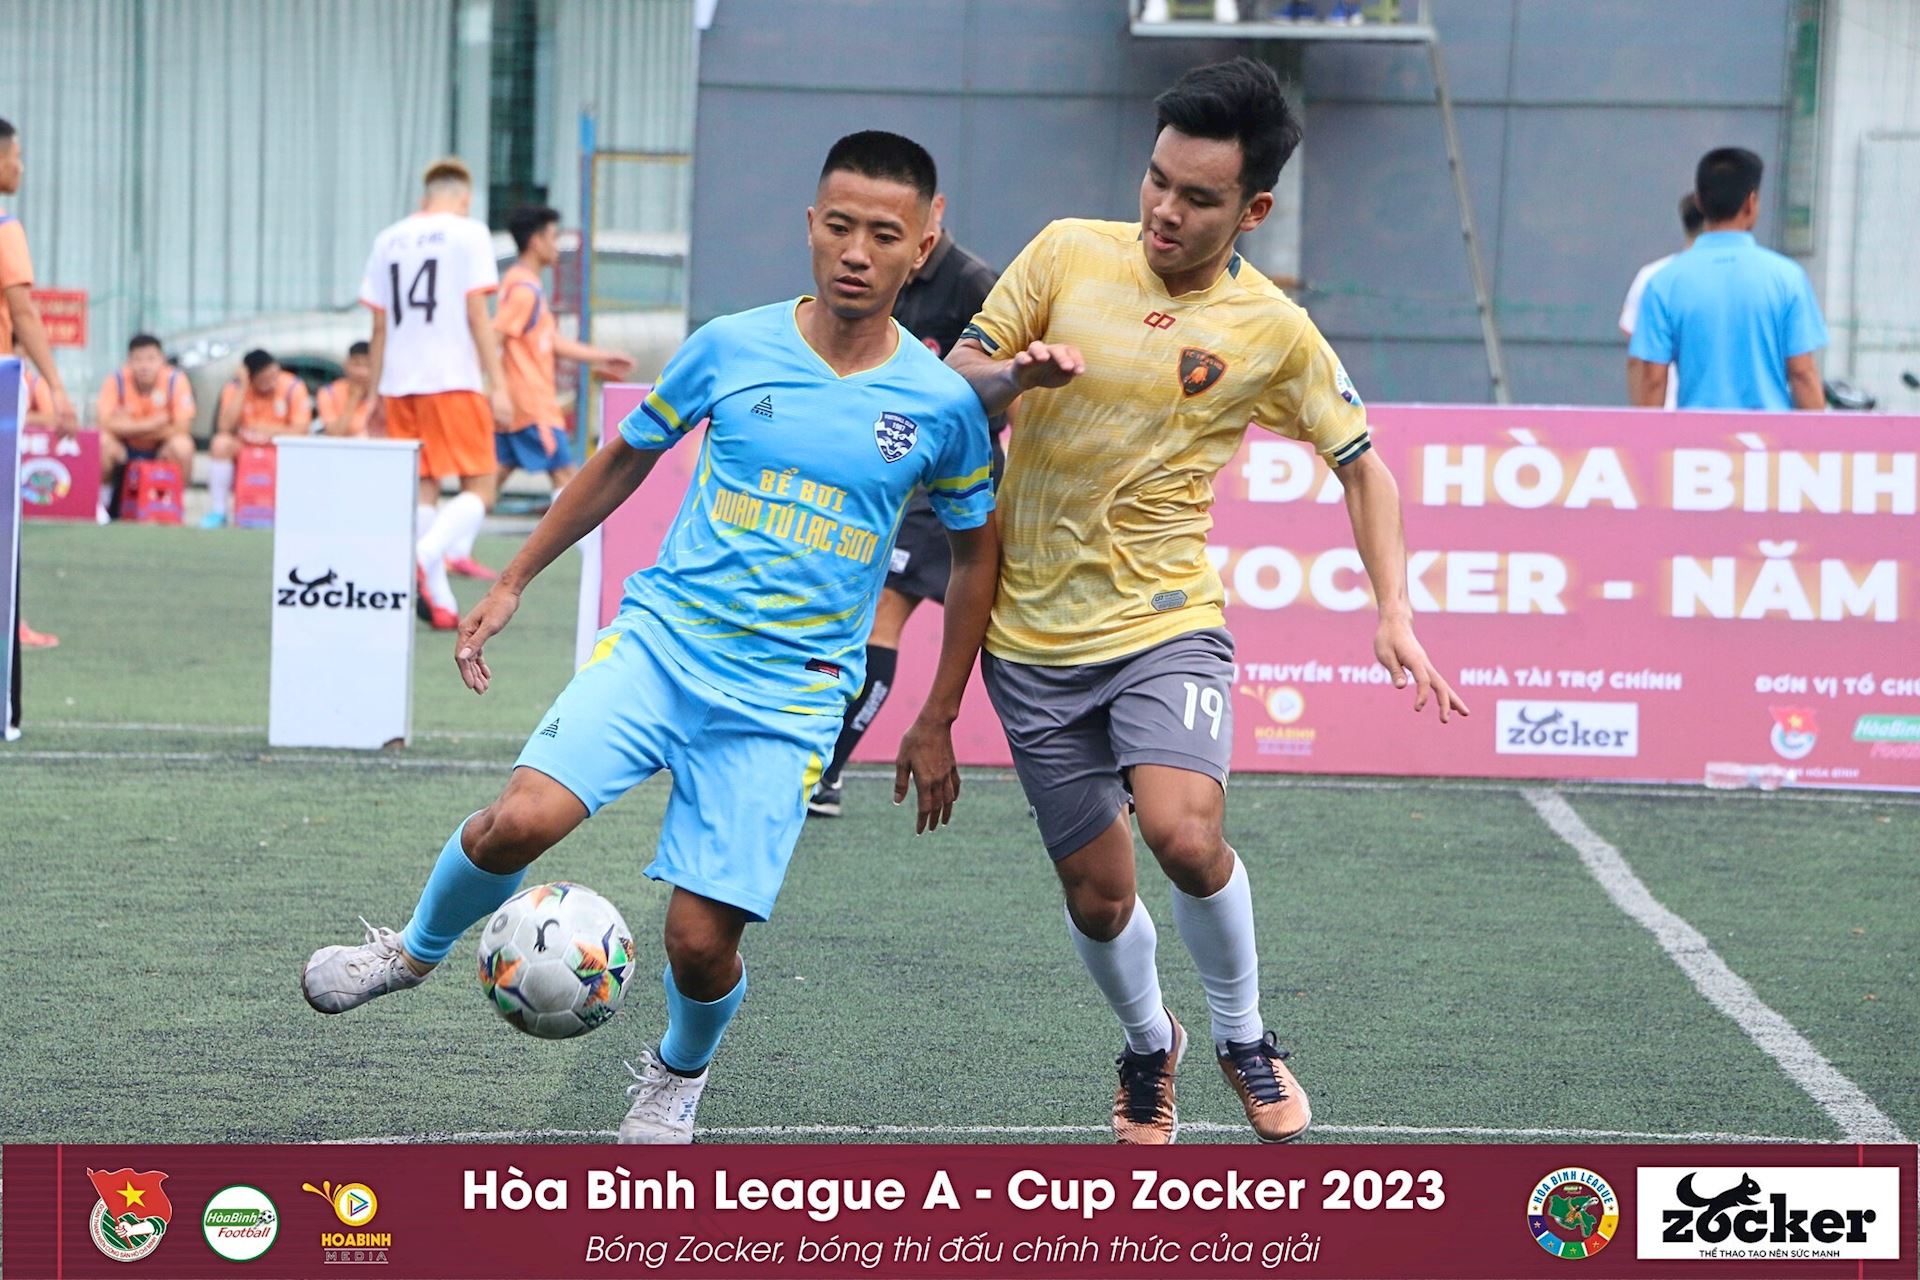 bong-zocker-Hoa-Bình-League-ZOCKER-CUP-2023-4